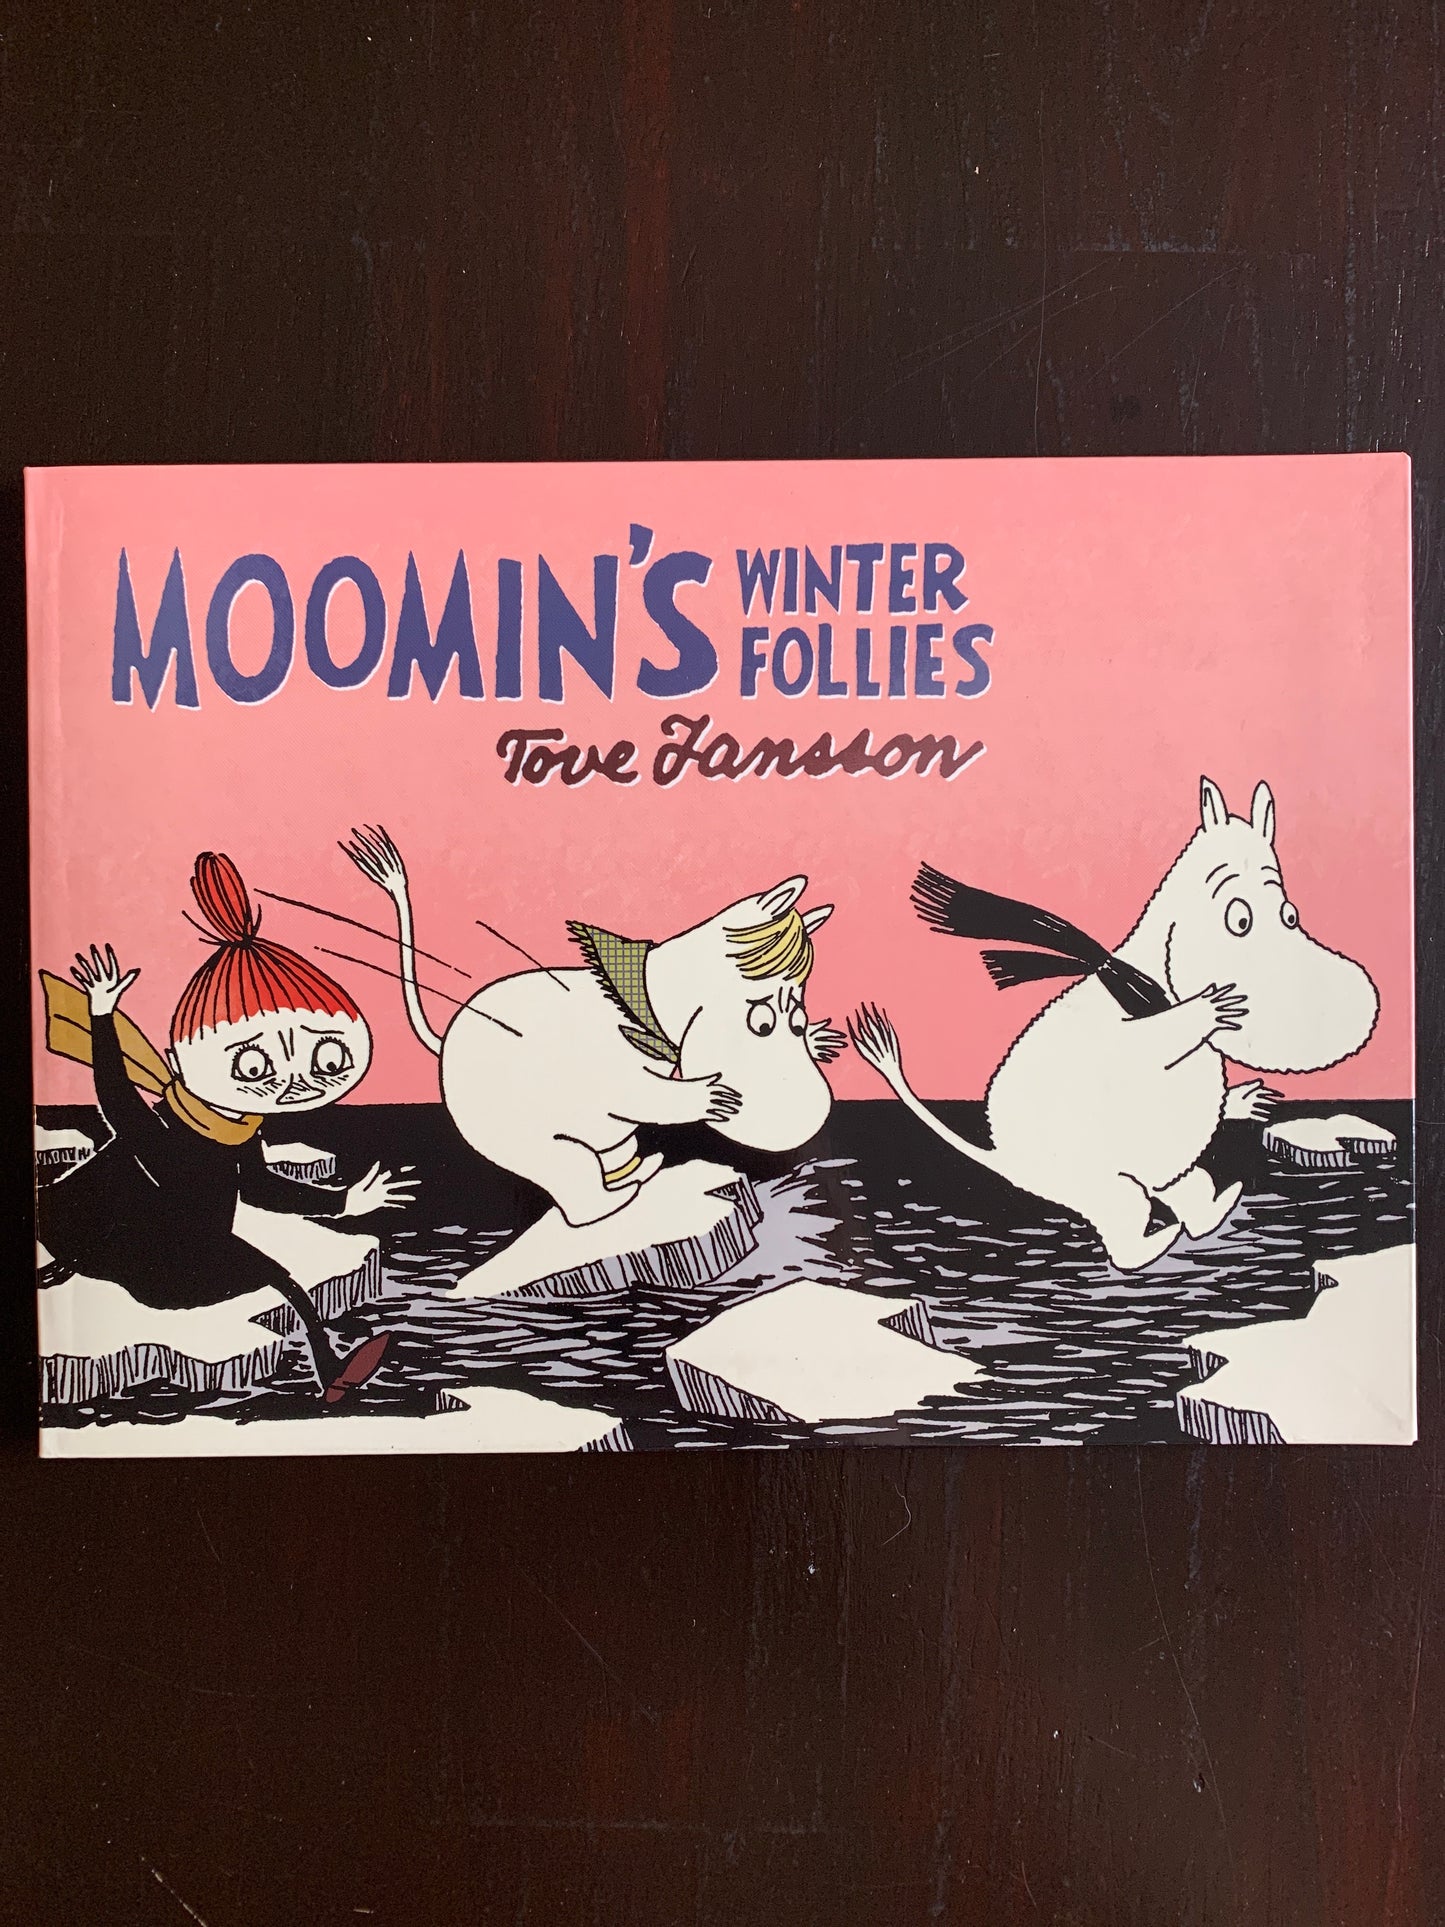 Moomin’s Winter Follies